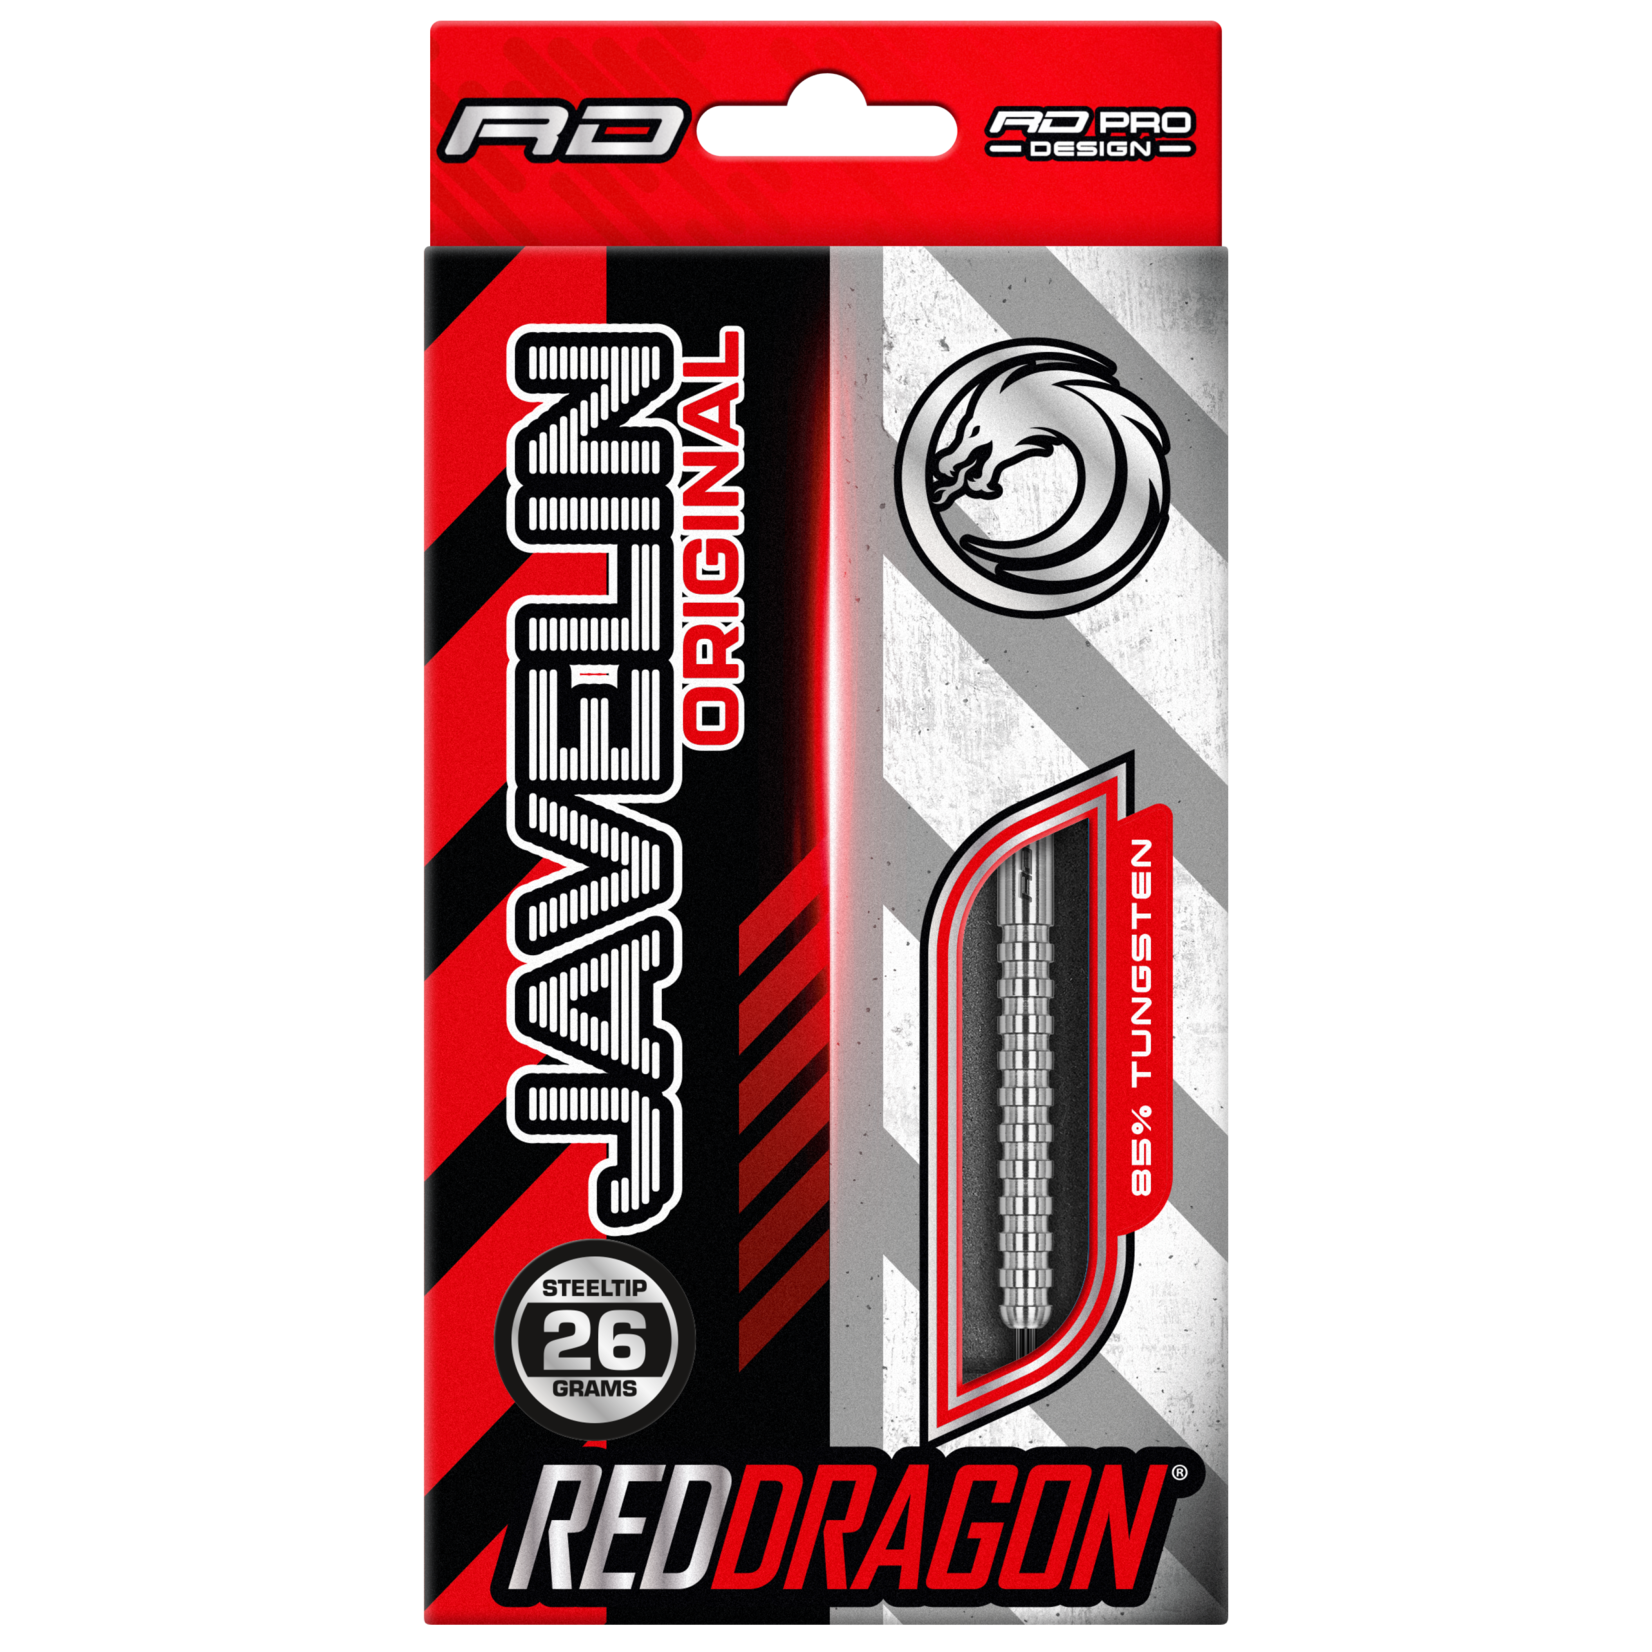 RED DRAGON Red Dragon Javelin  26 grams Steel Tip Darts